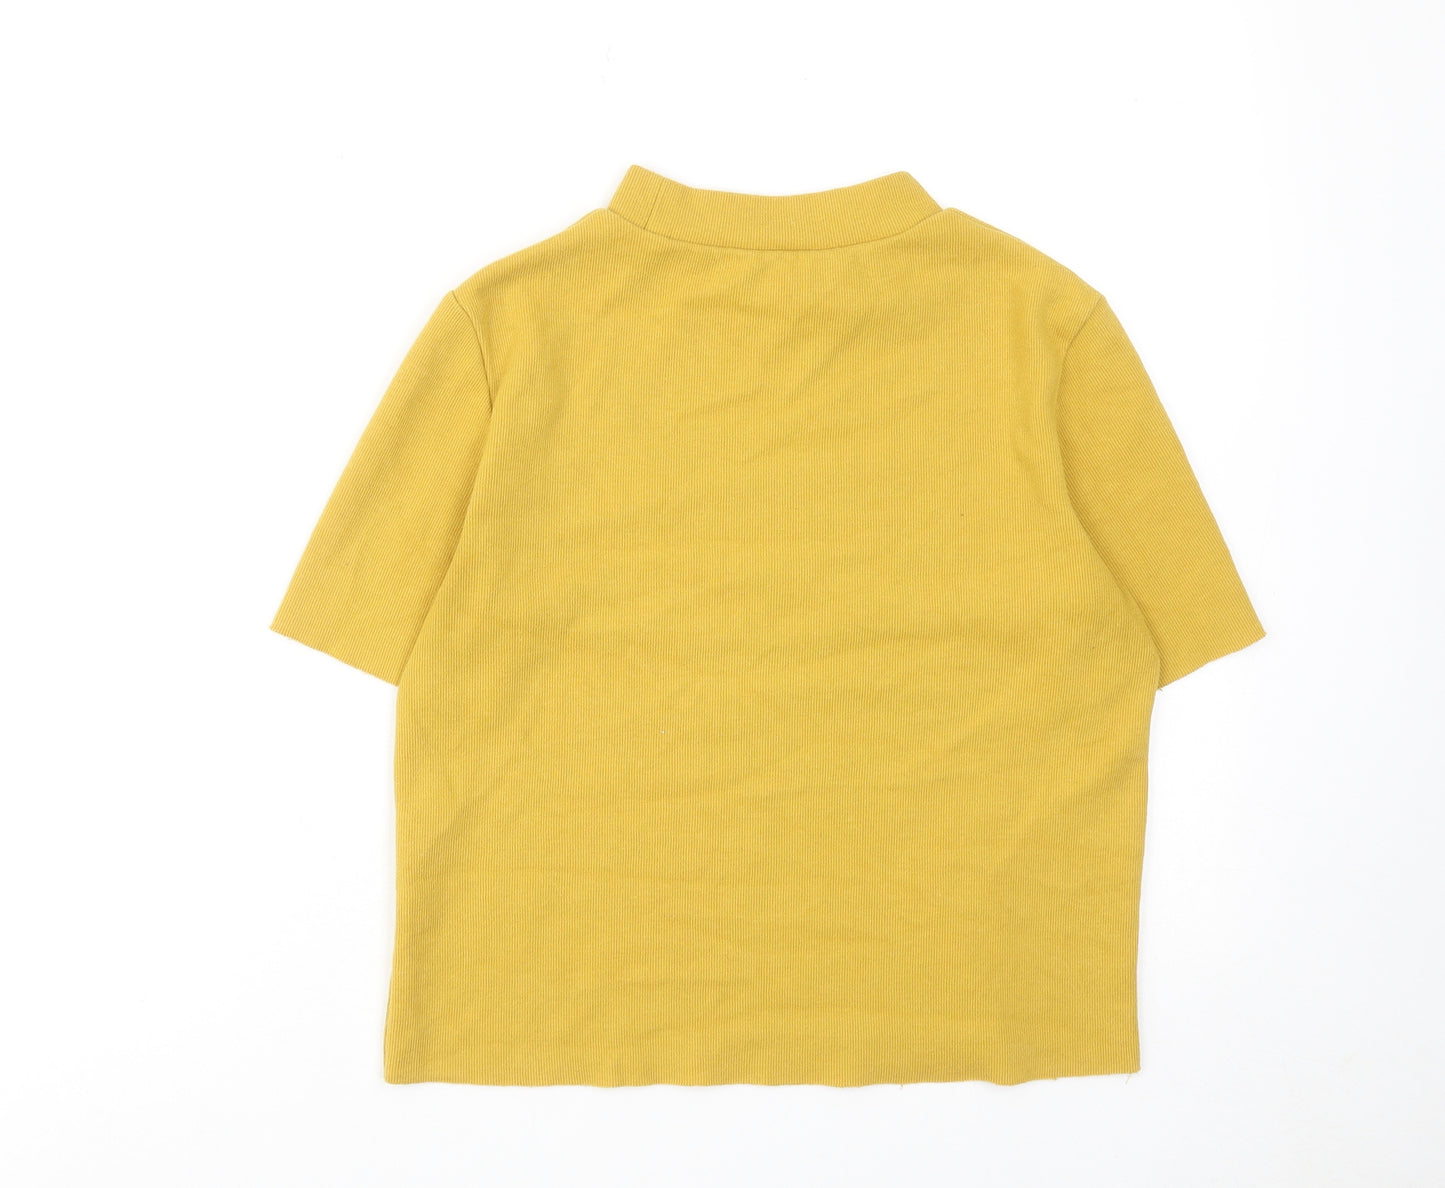 Zara Womens Yellow Cotton Basic T-Shirt Size M Mock Neck